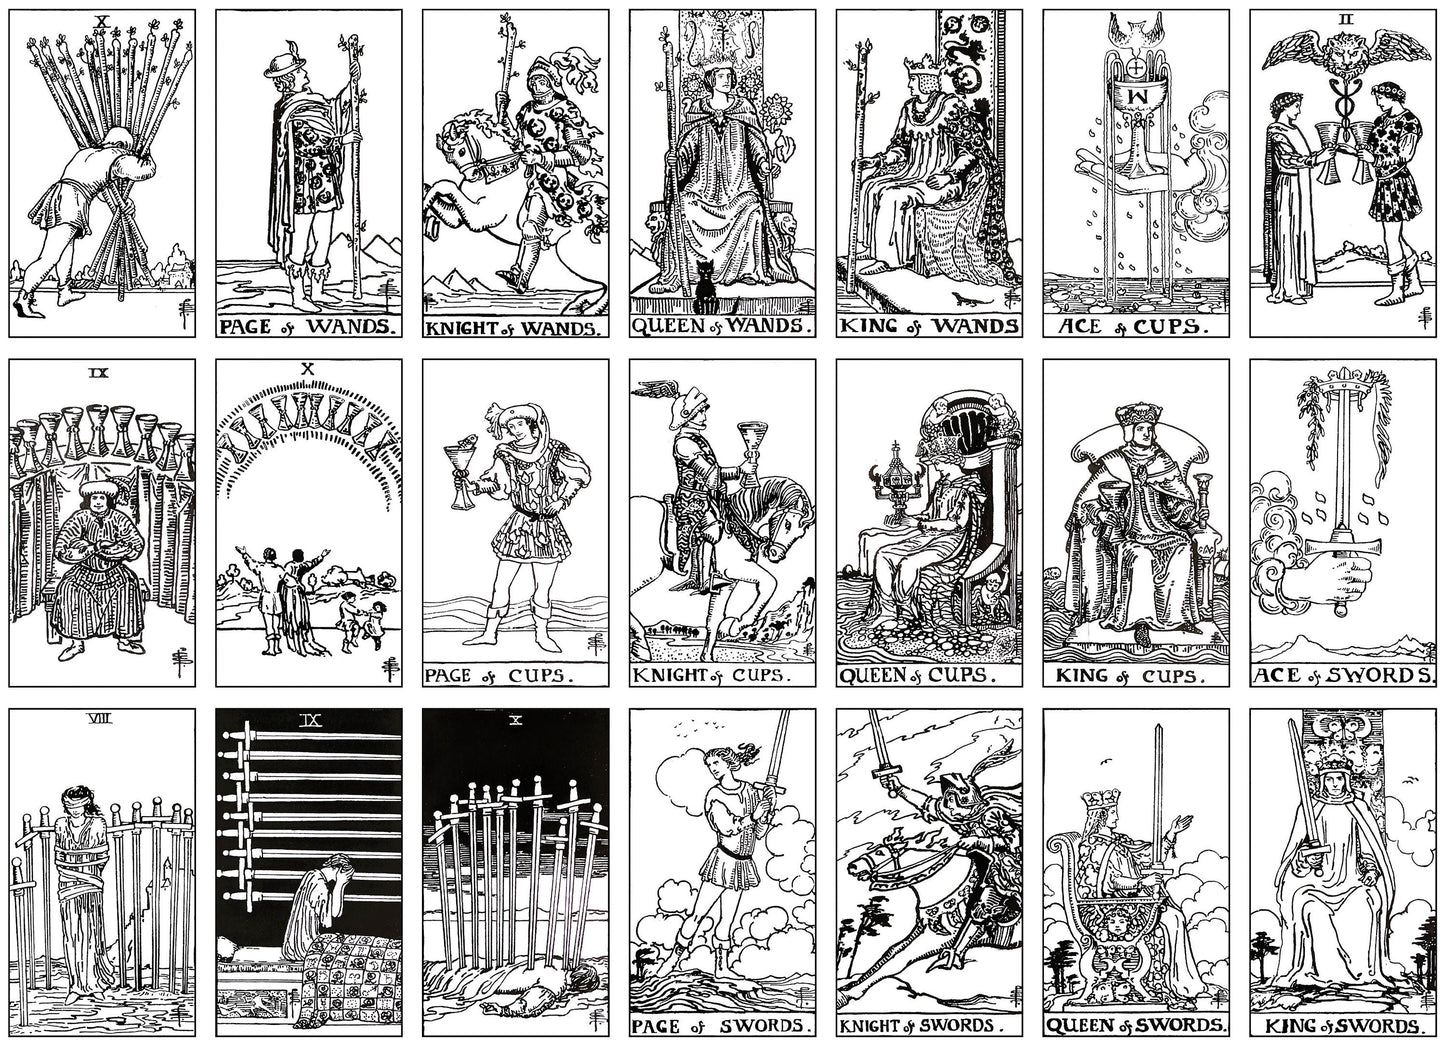 Rider Waite Smith Tarot Card Deck Black & White [78 Images]